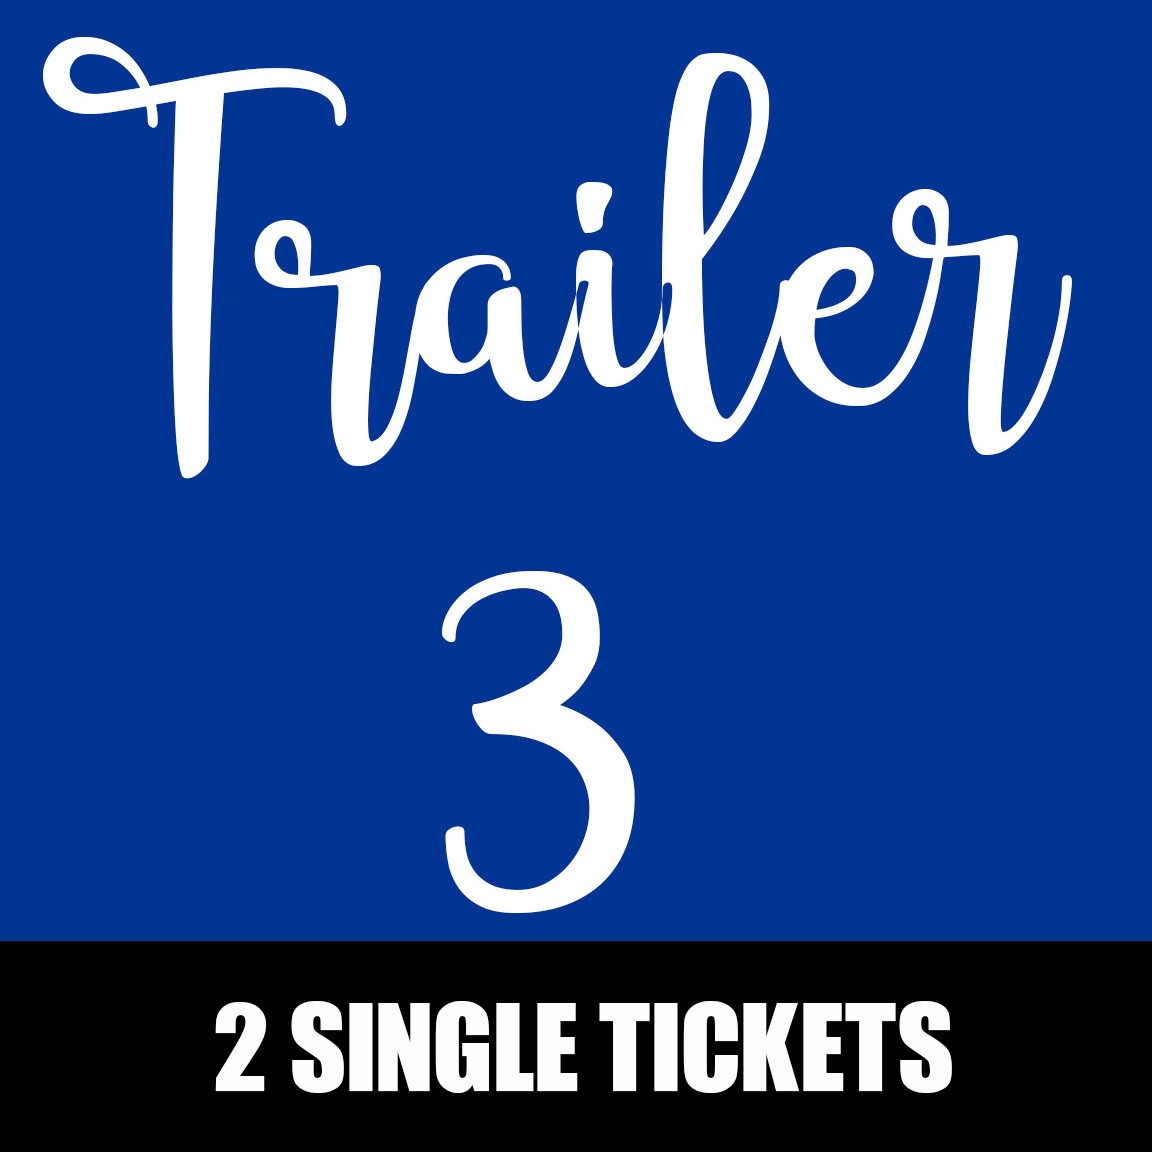 Trailer 3 - December 3rd @ 7pm - Single Tickets